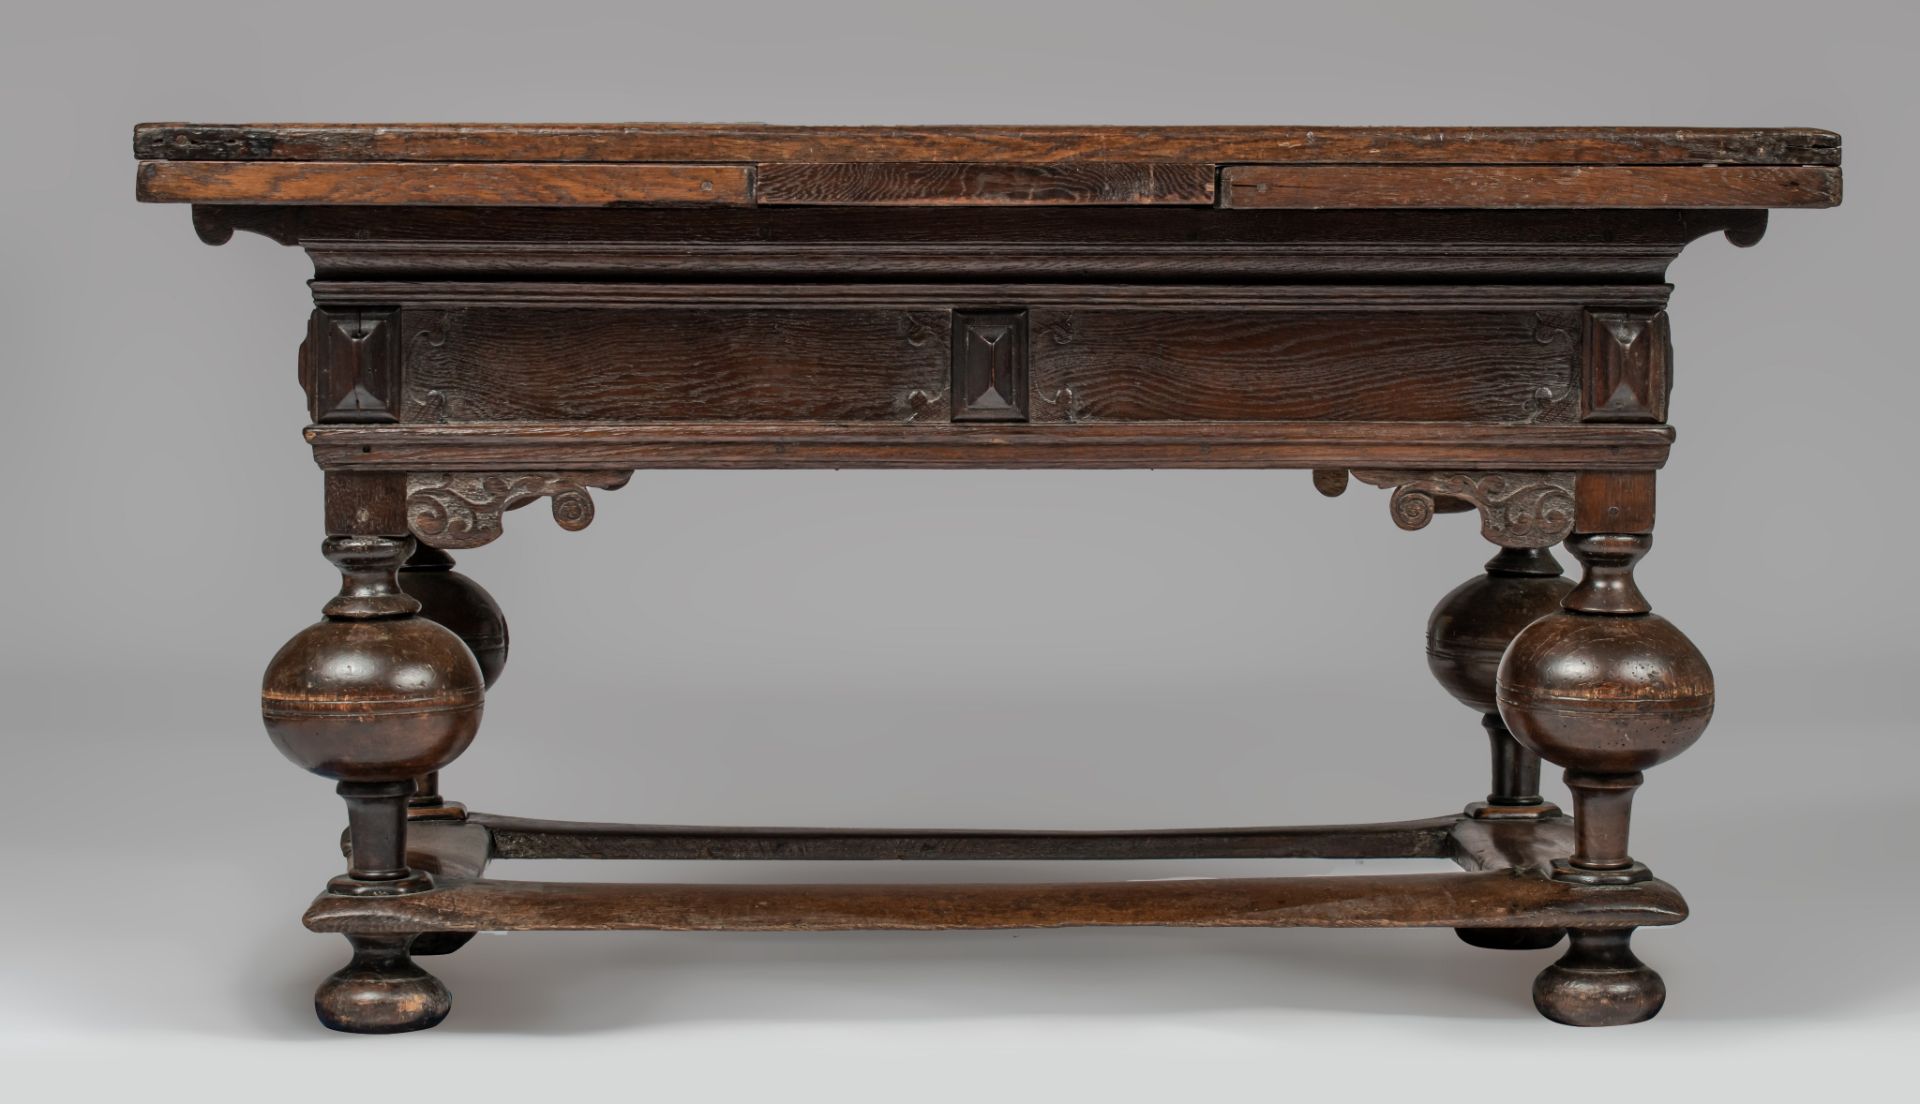 An impressive Flemish or Dutch oak table, early 17thC, H 80 - W 146 - 252 - D 85 cm - Image 2 of 8